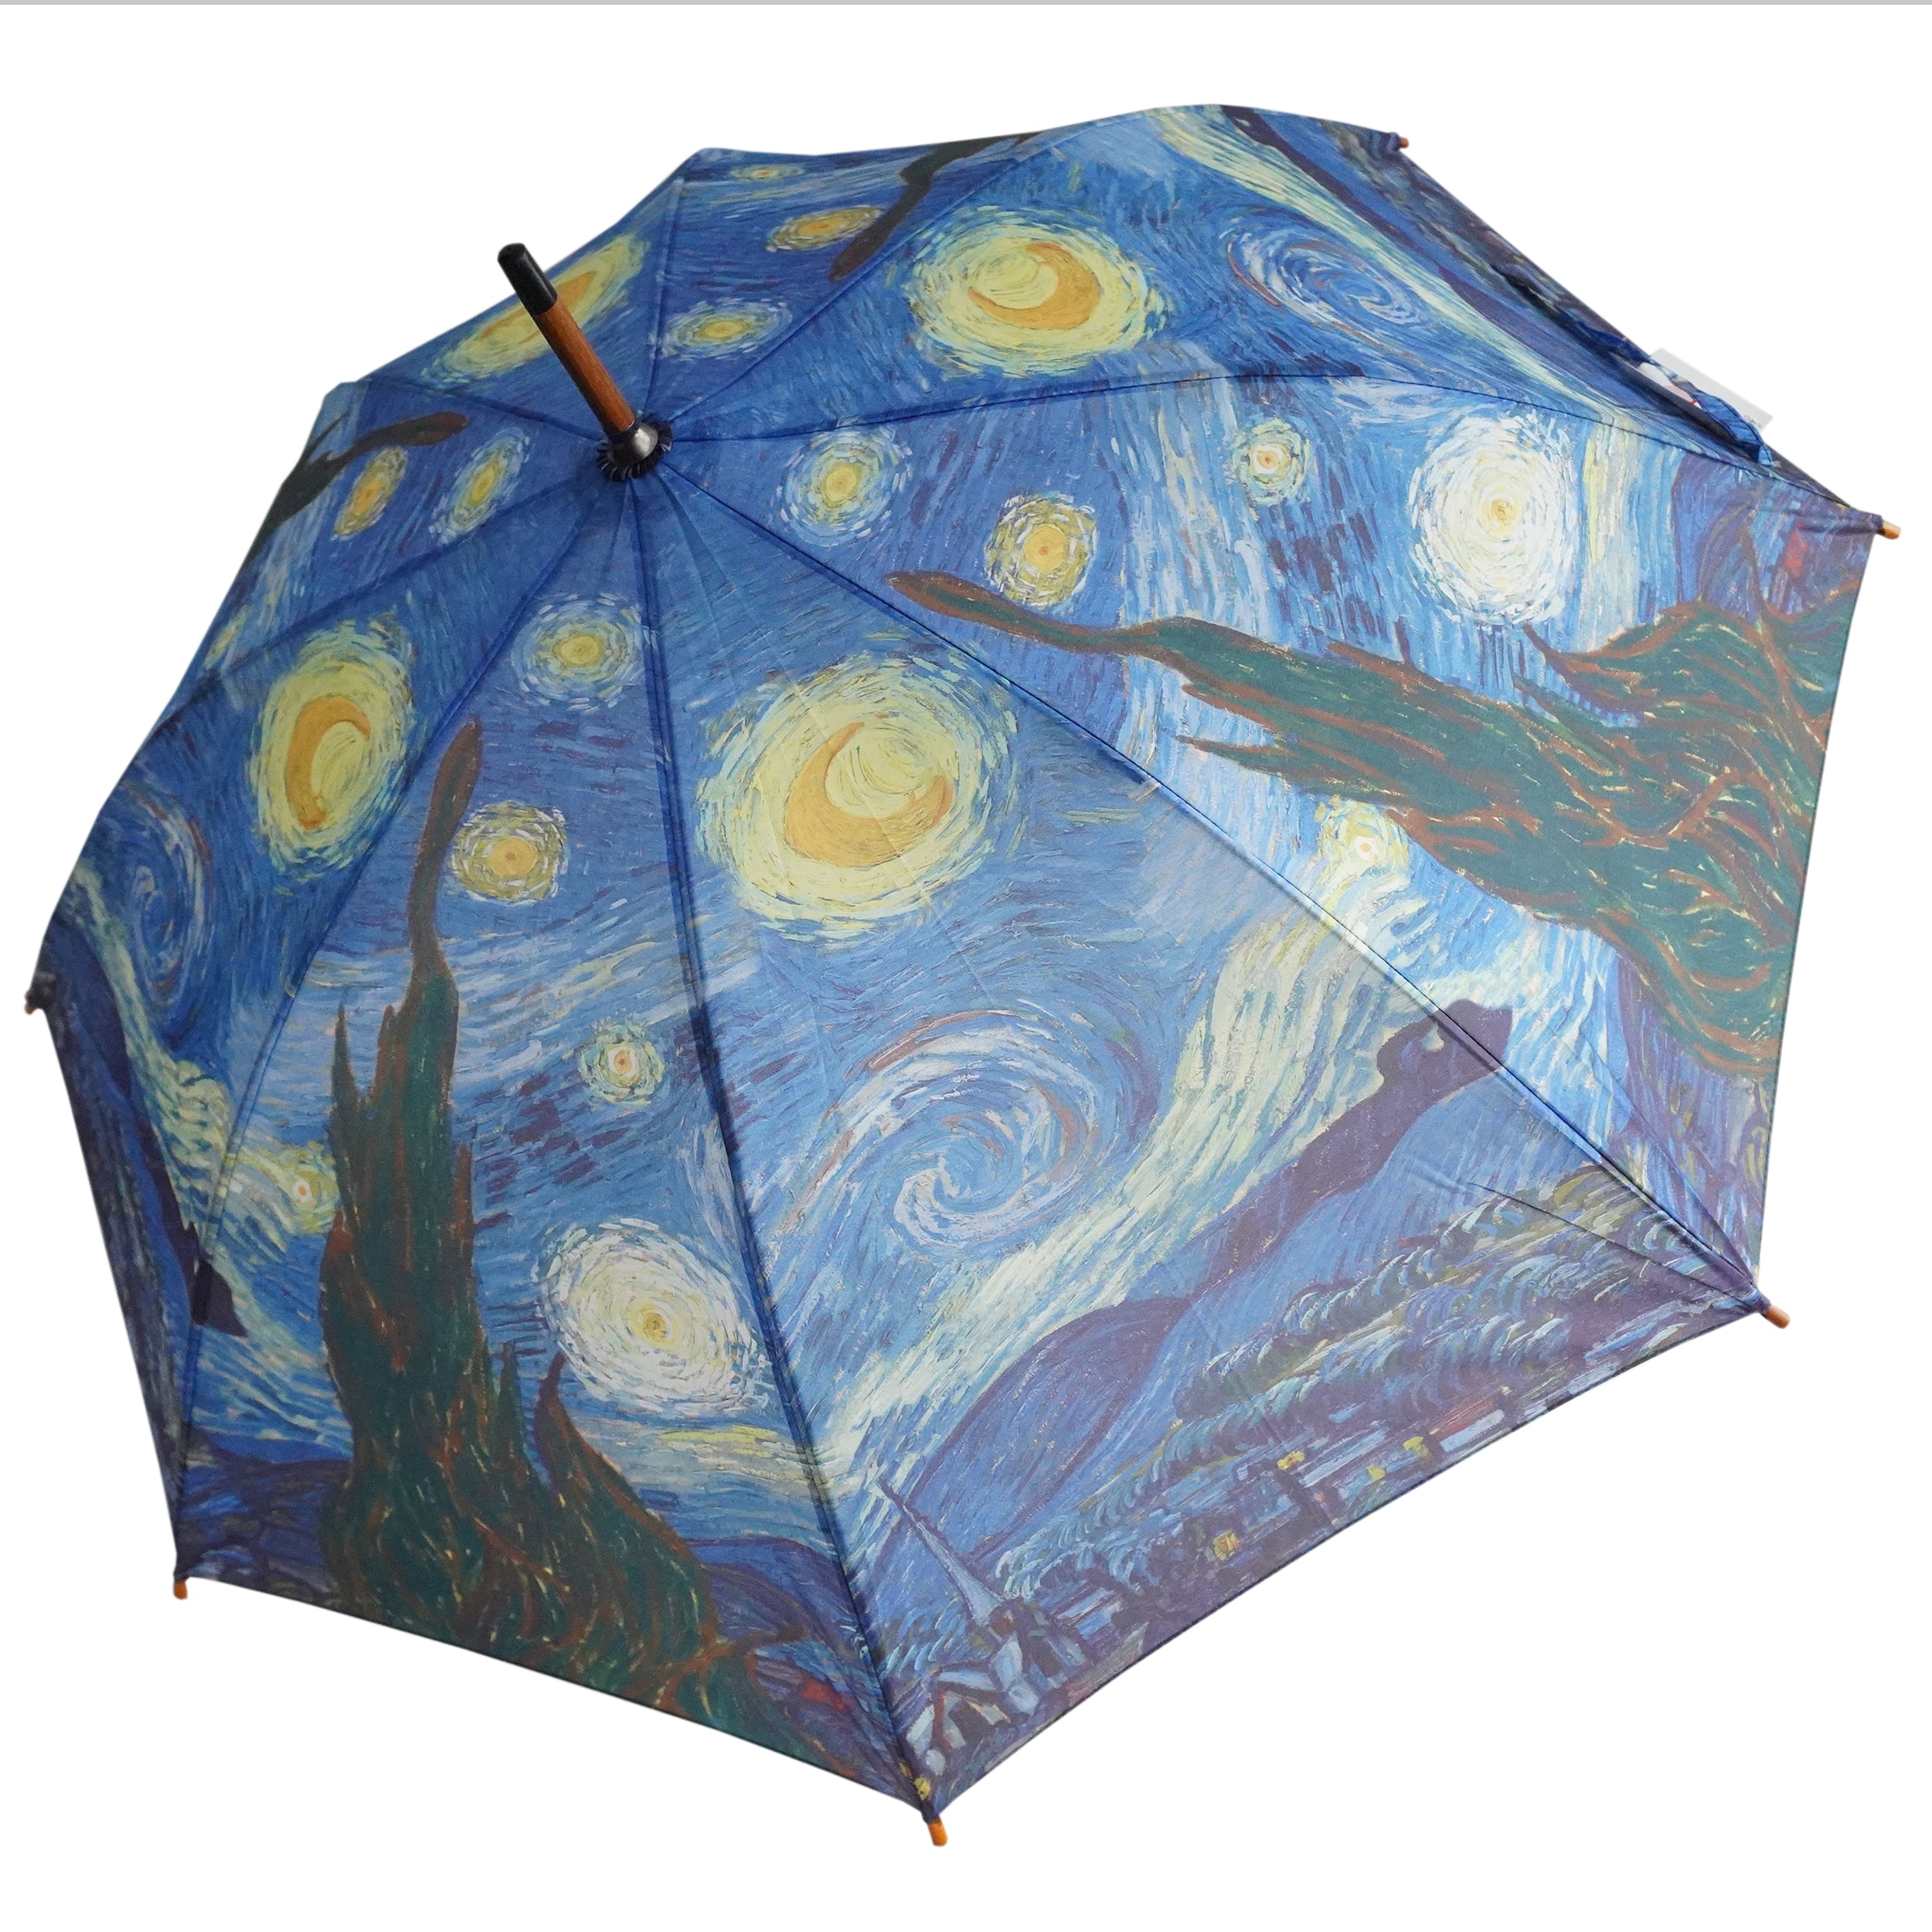 Vincent van Gogh's "Starry Night" Wooden Stick Umbrella